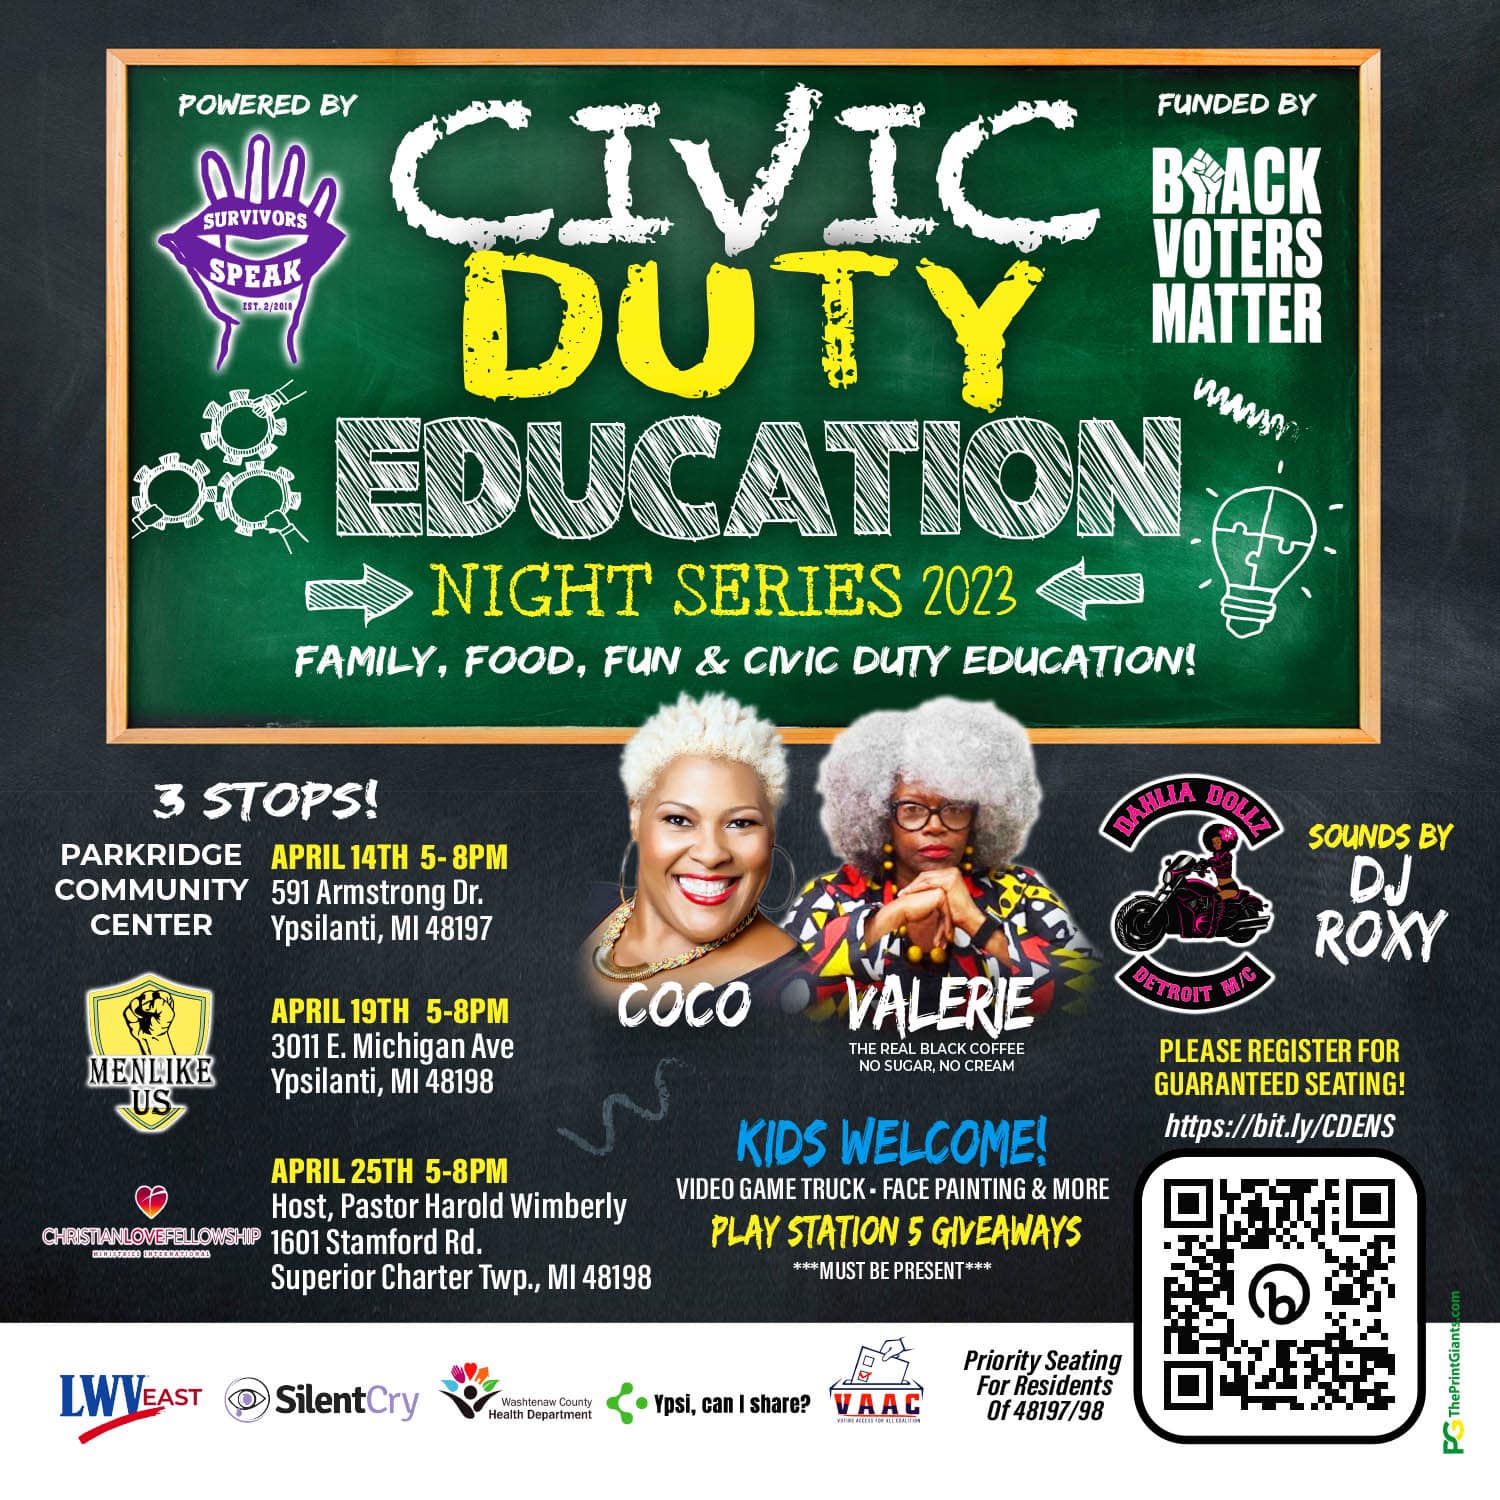 Survivors Speak Civic Duty Education Night Series